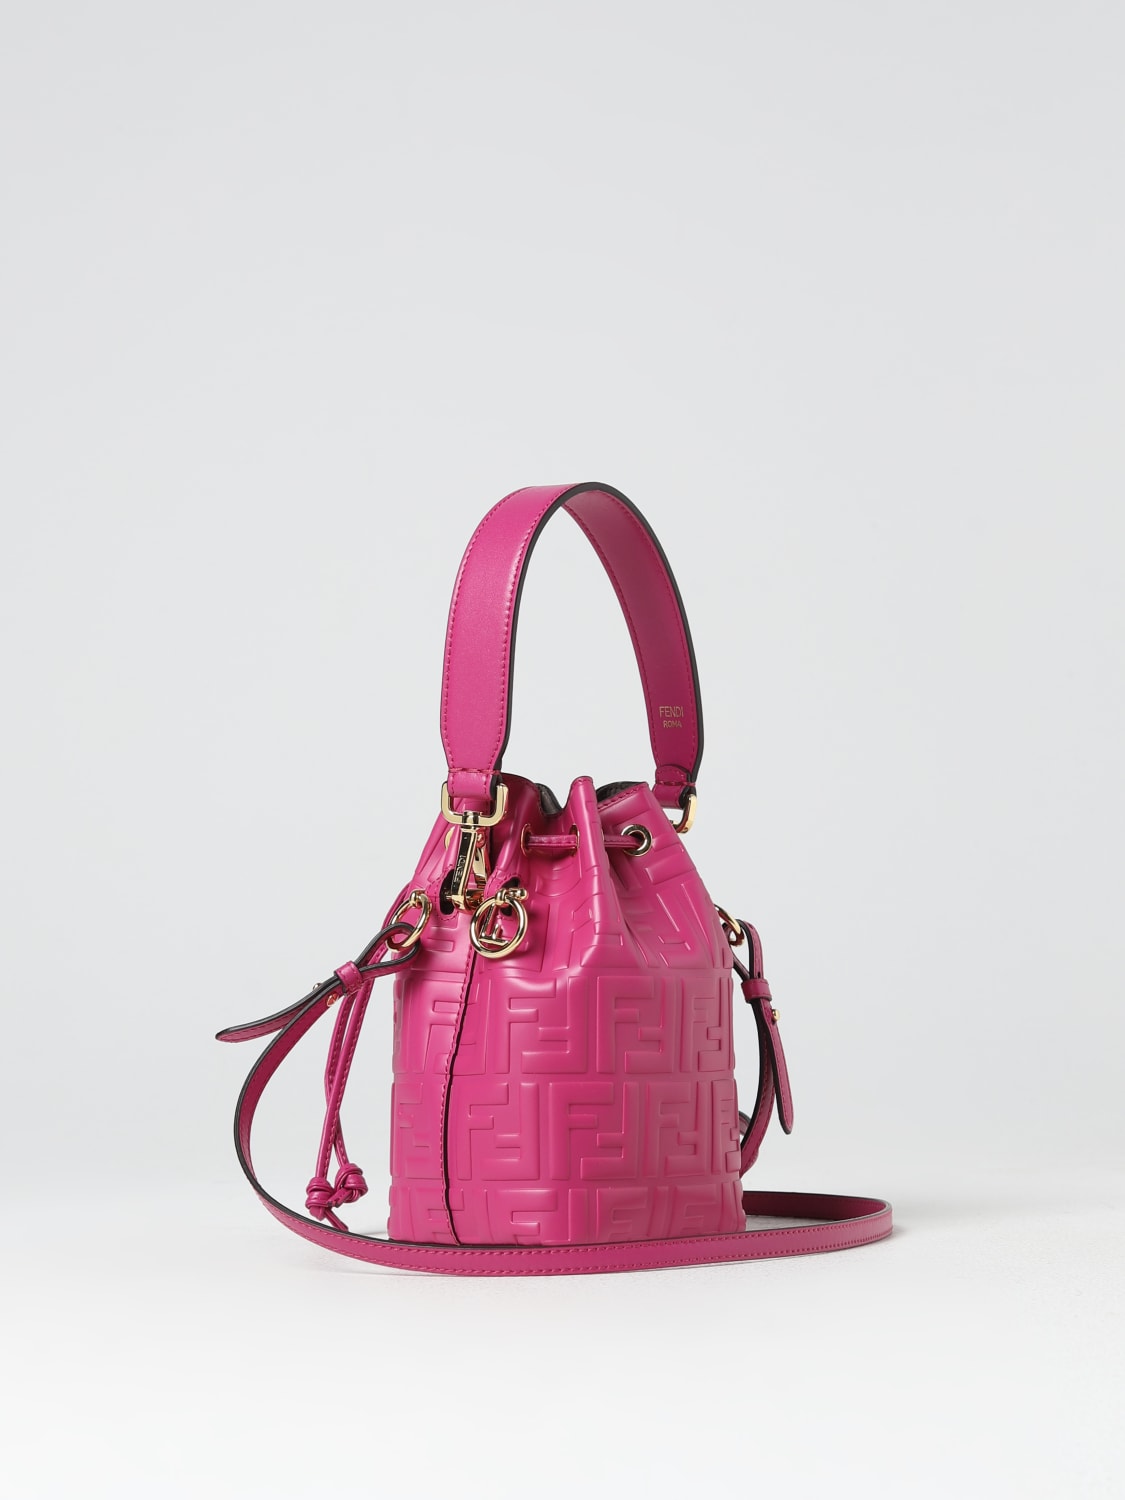 Fendi Mon Tresor Leather Bucket Bag in Pink